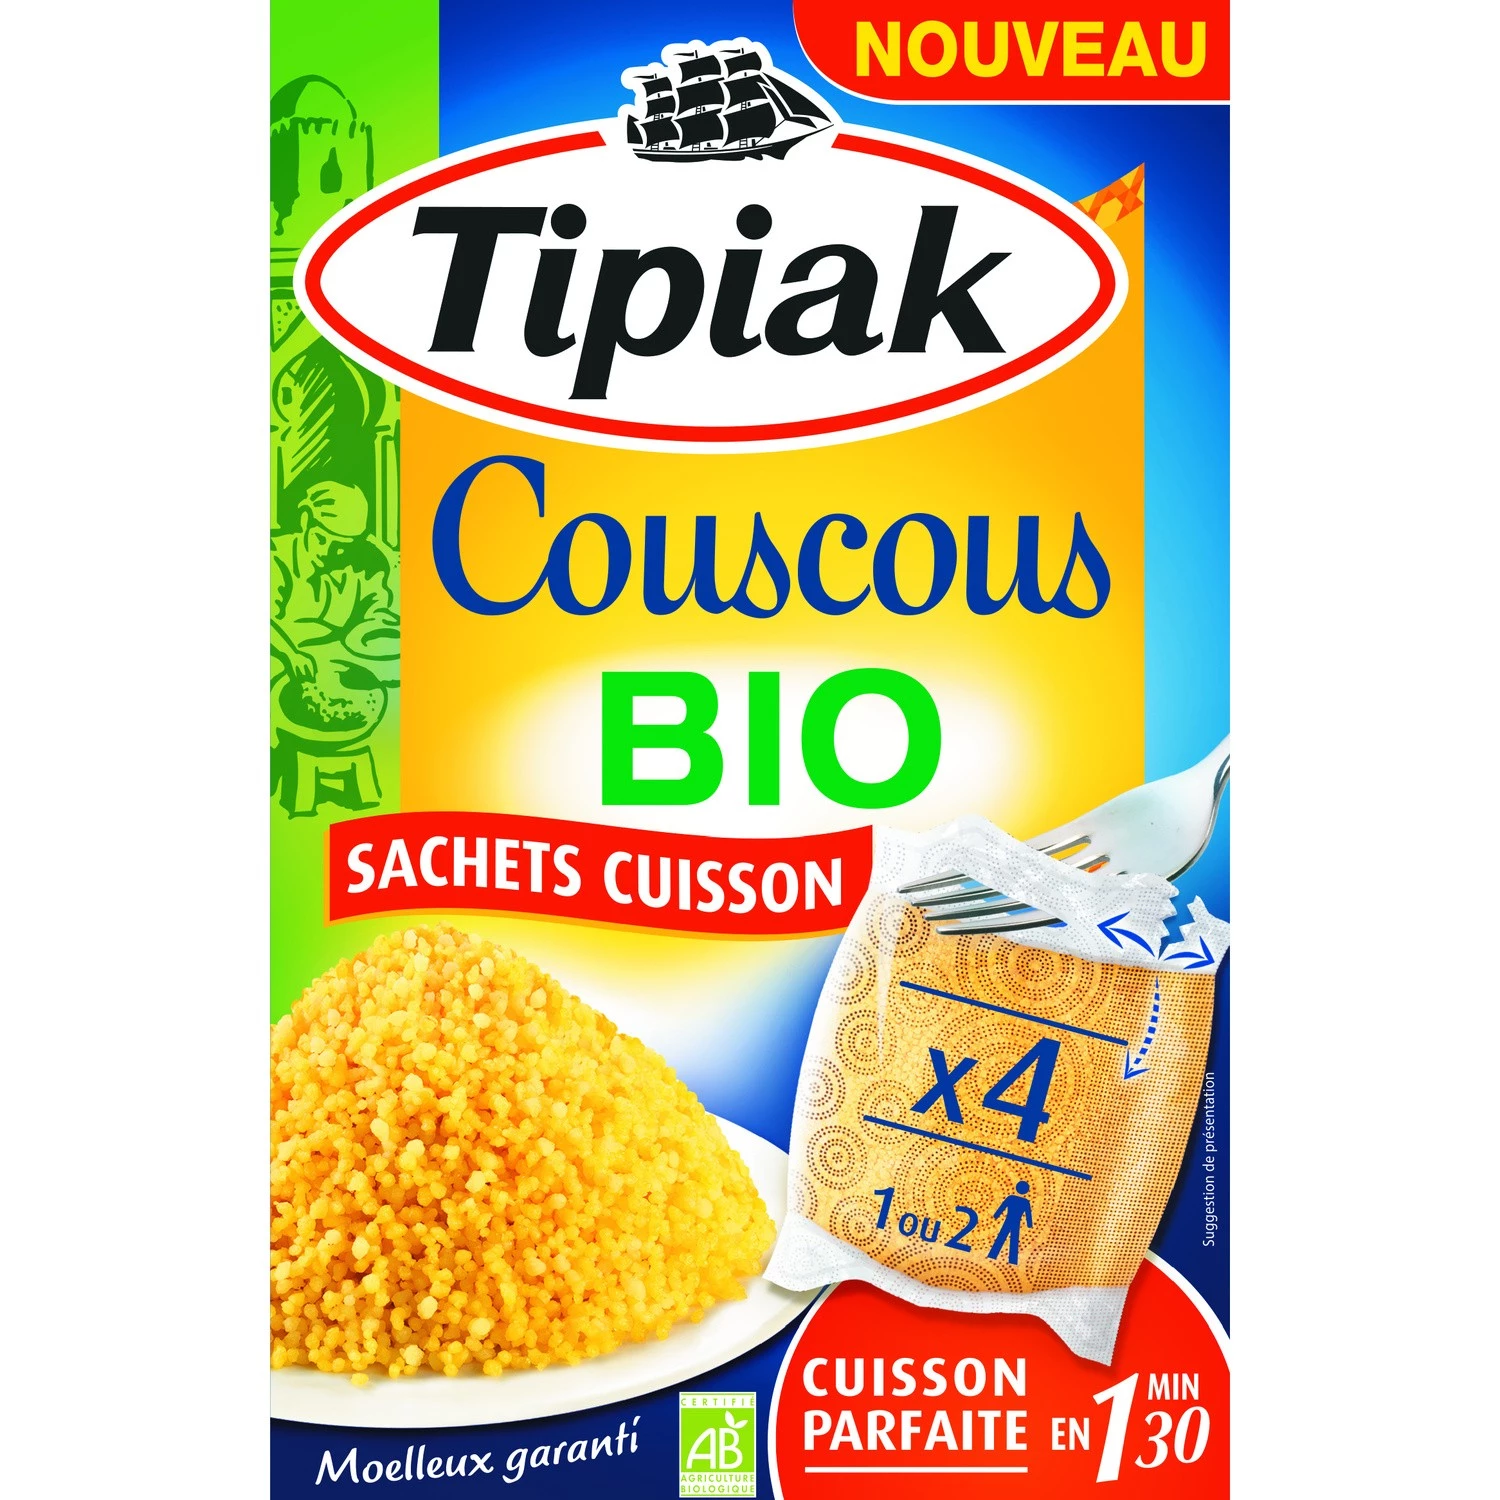 Organic couscous in 4x100g bags - TIPIAK